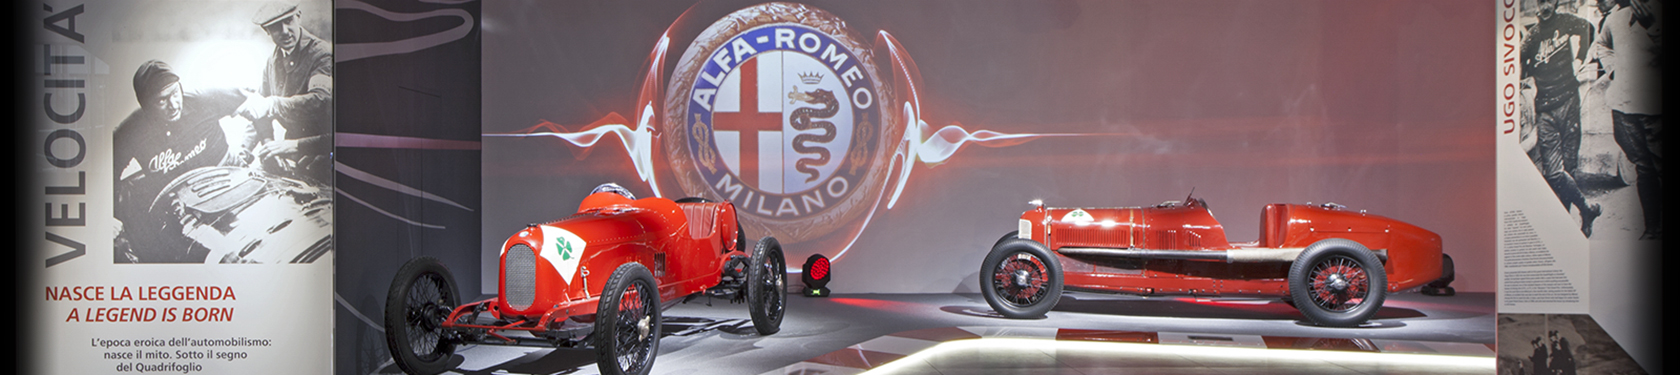 Photo of Alfa romeo vintage cars